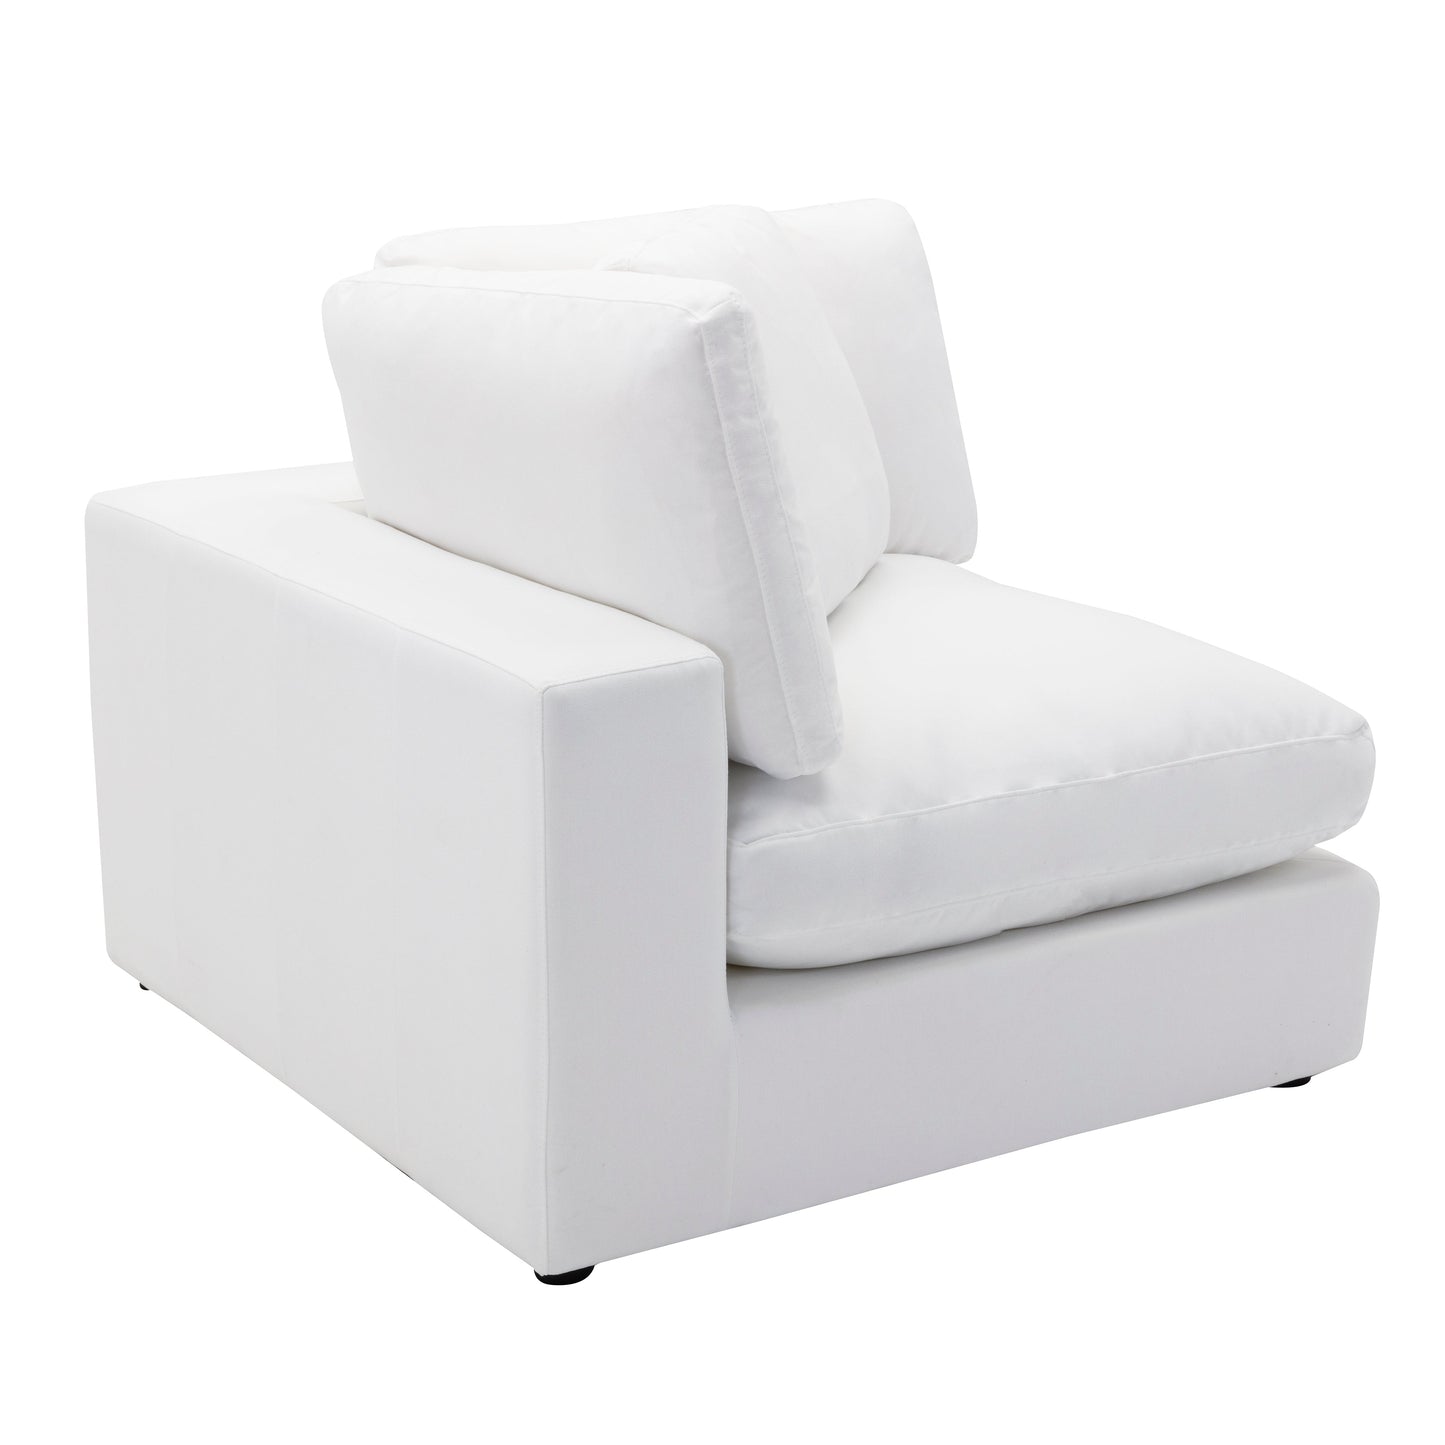 Rivas Contemporary Feather Fill 7-Piece Modular Sectional Sofa with Ottoman, White